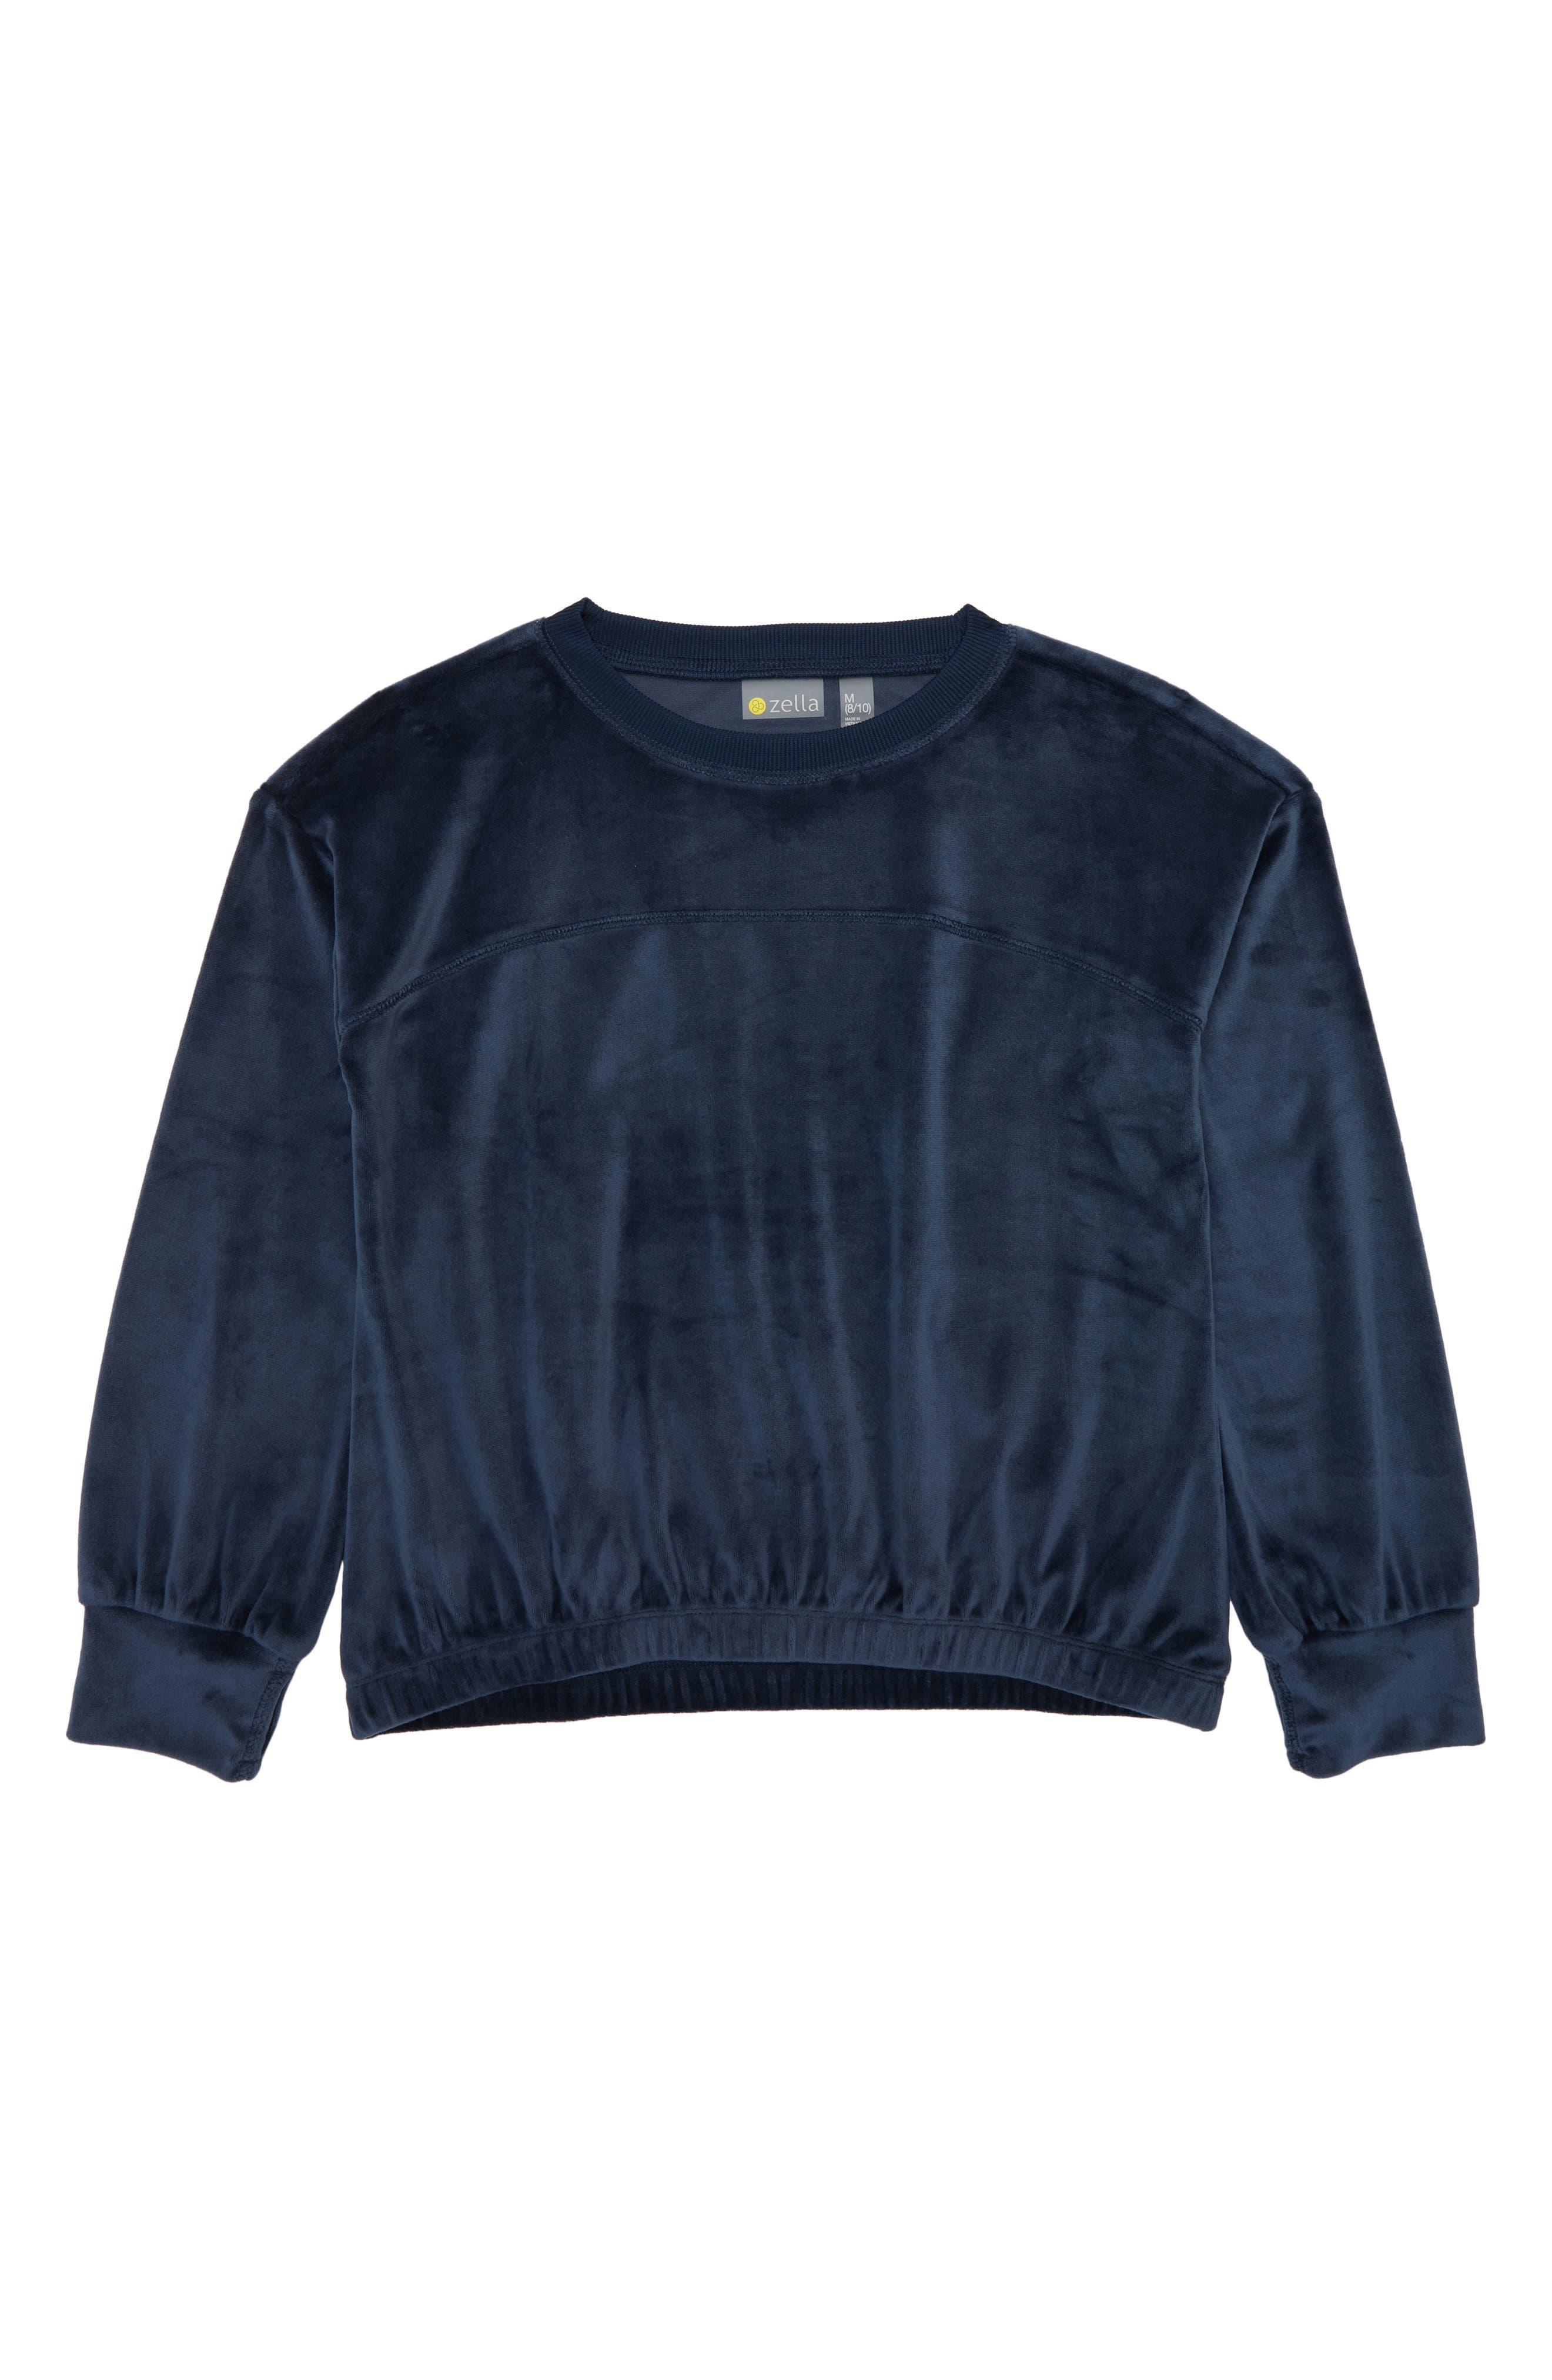 discount 96% NoName sweatshirt KIDS FASHION Jumpers & Sweatshirts Hoodless Navy Blue 18-24M 